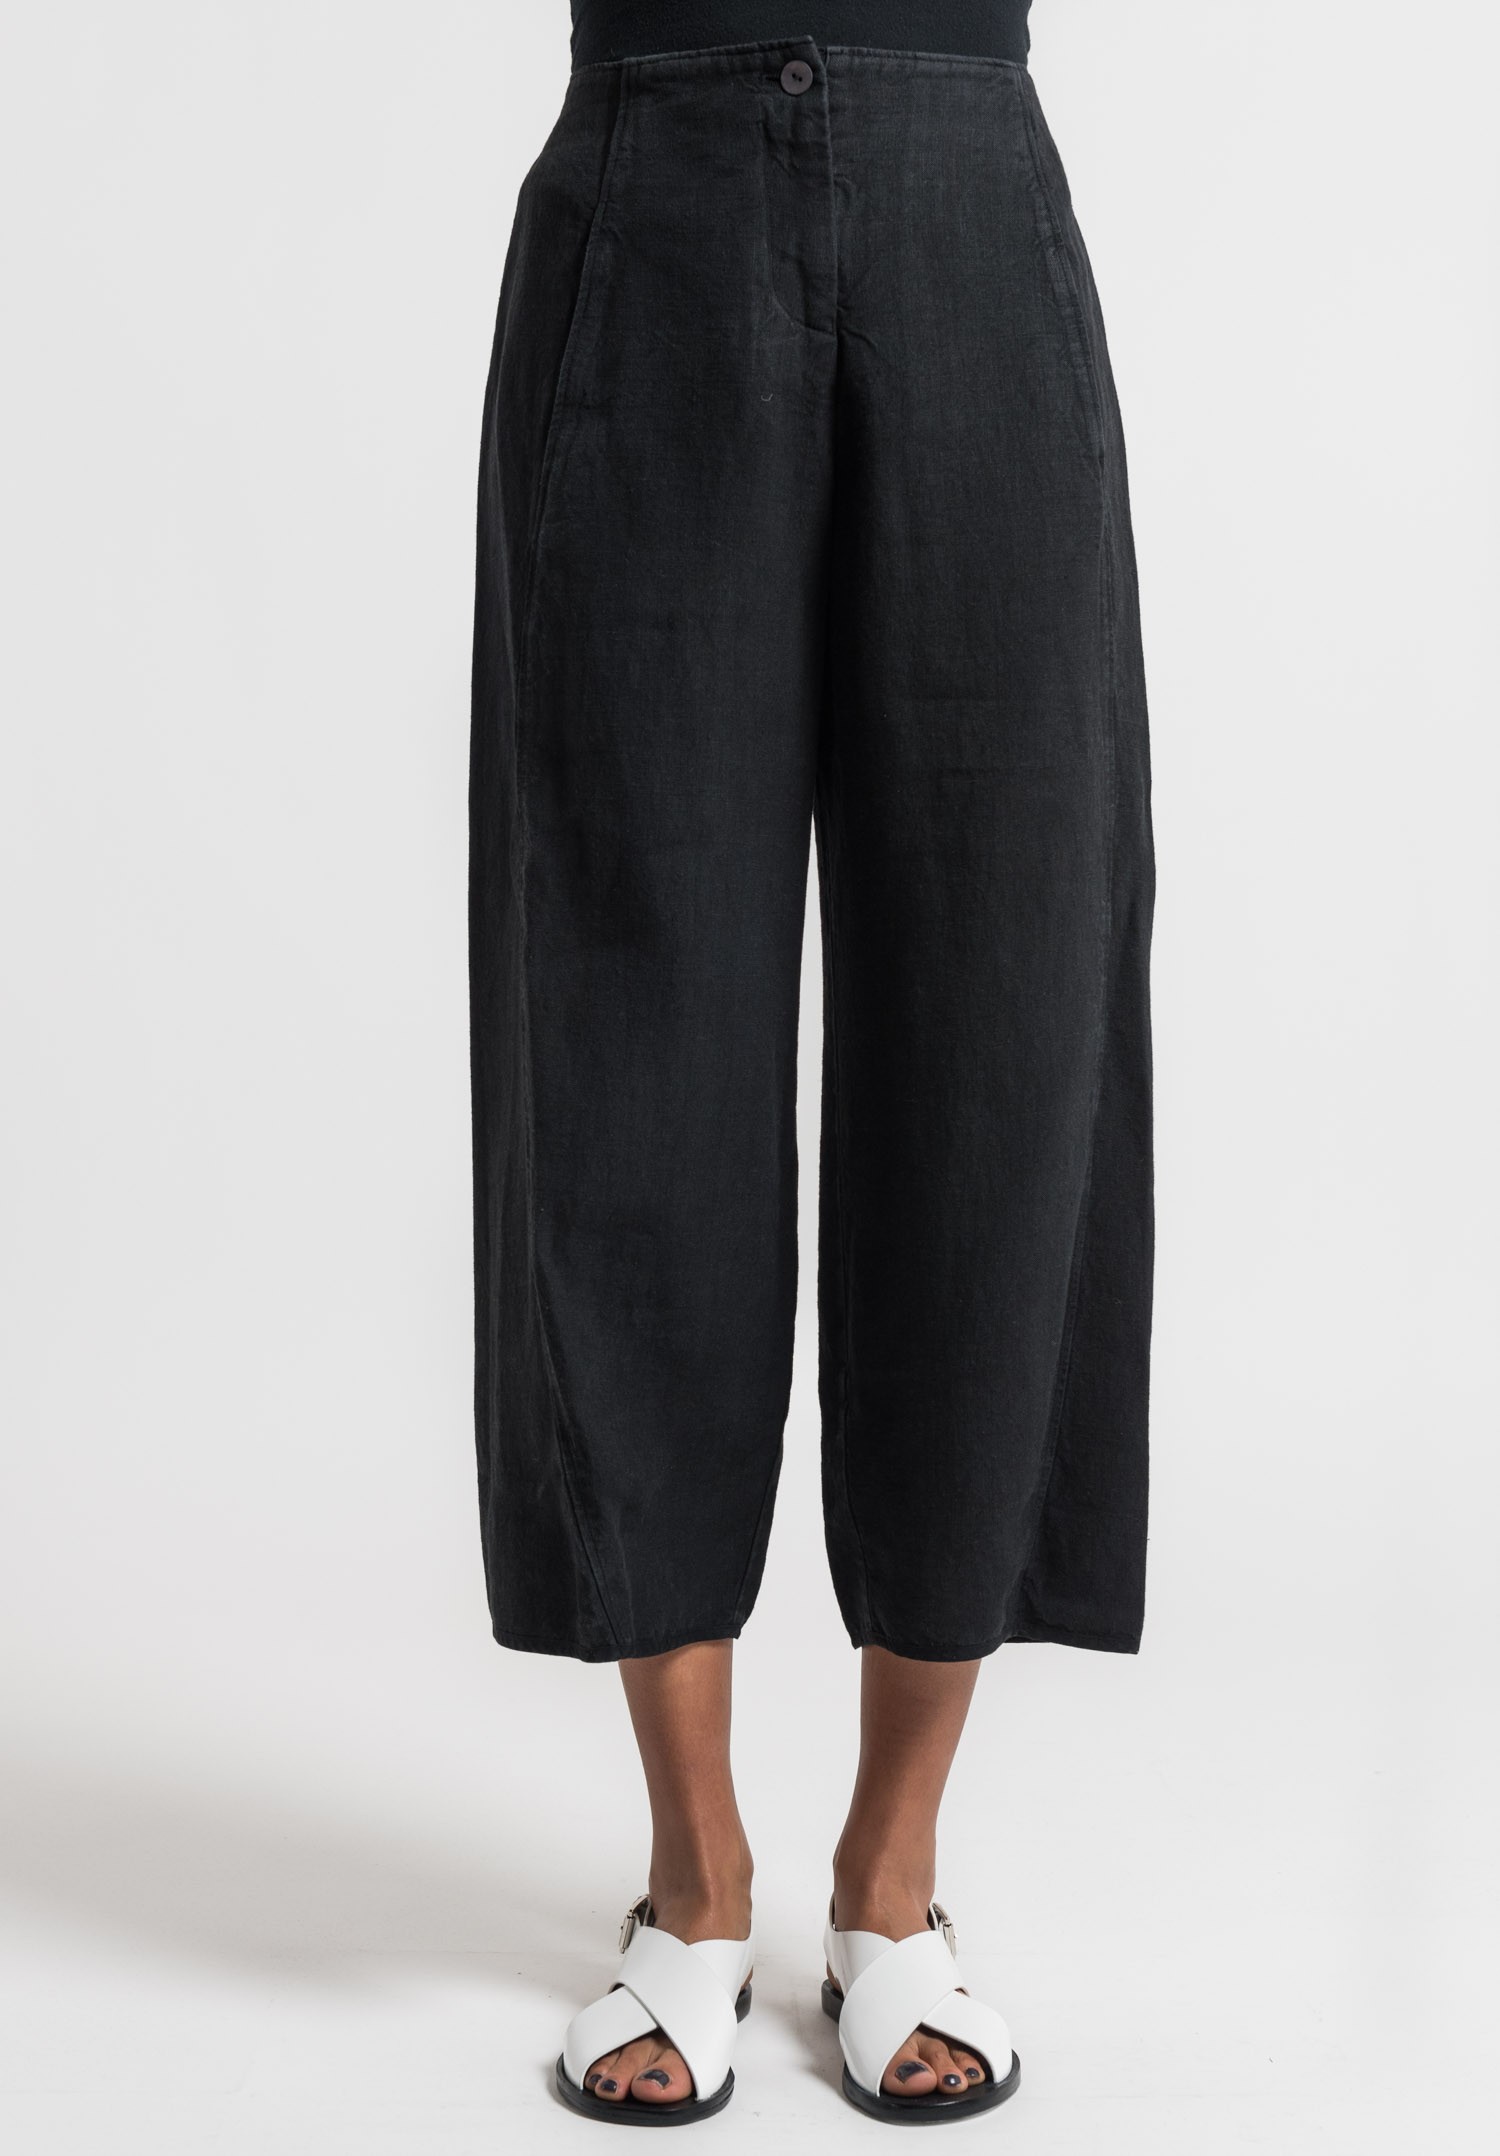 Oska Linen Tami Short Pants in Black | Santa Fe Dry Goods Trippen ...